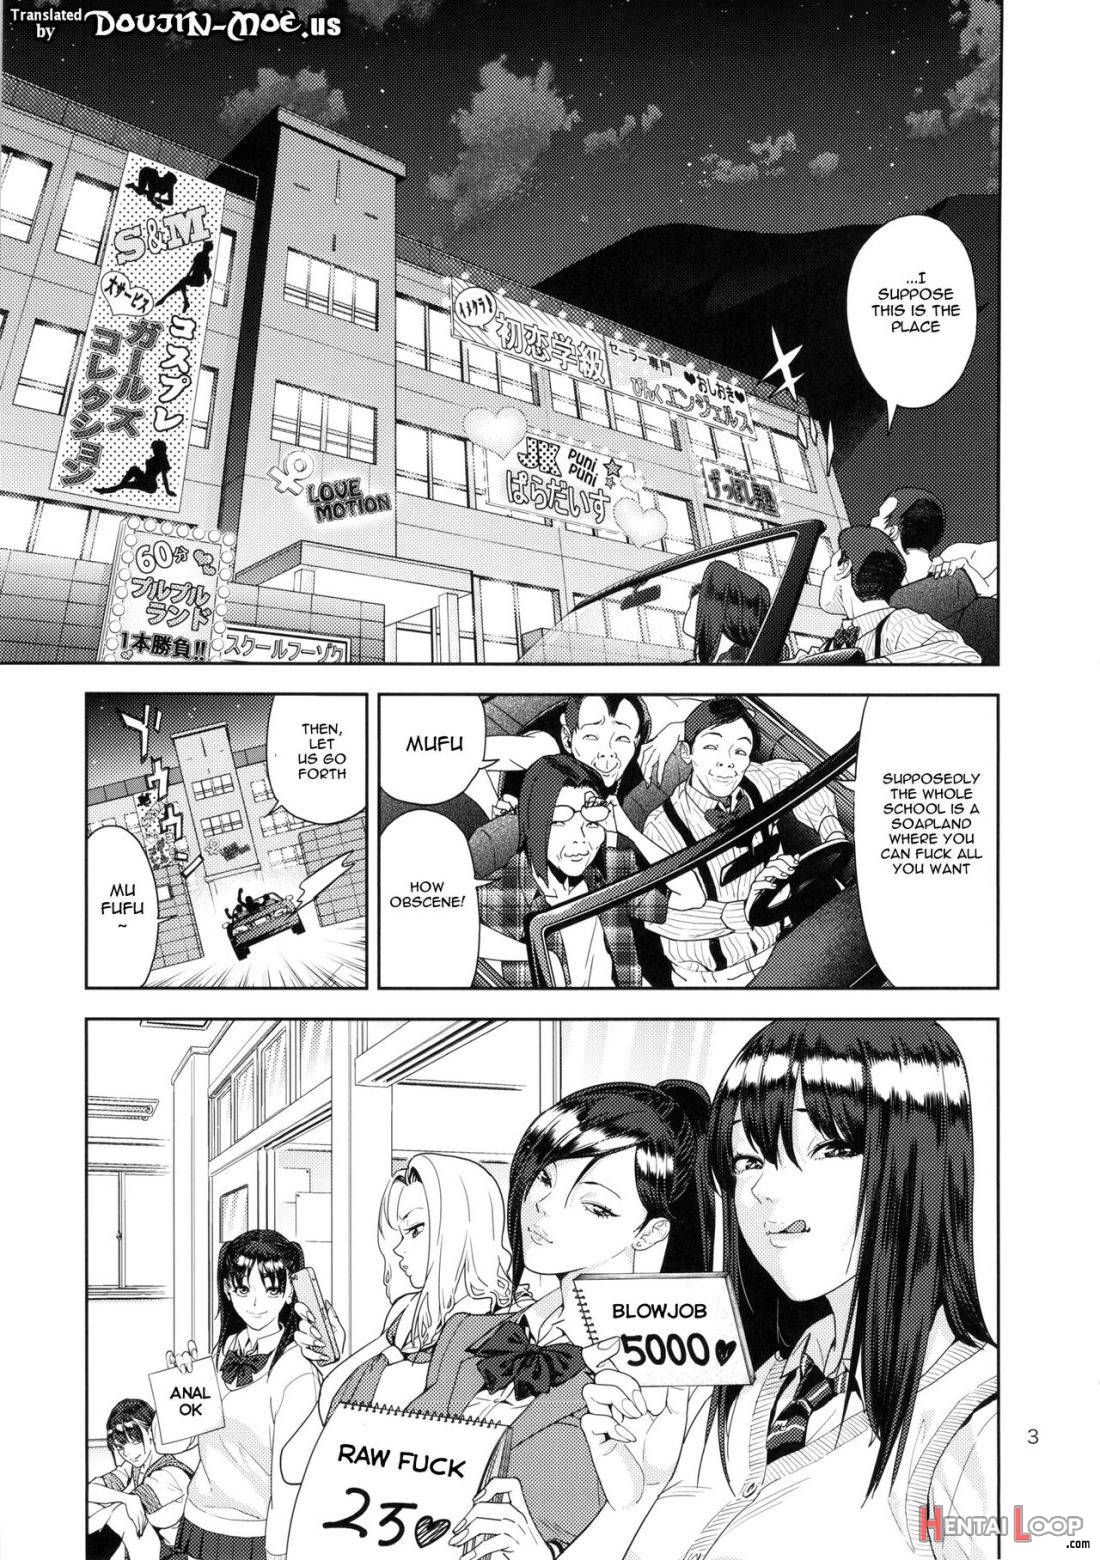 School Fuuzoku page 2